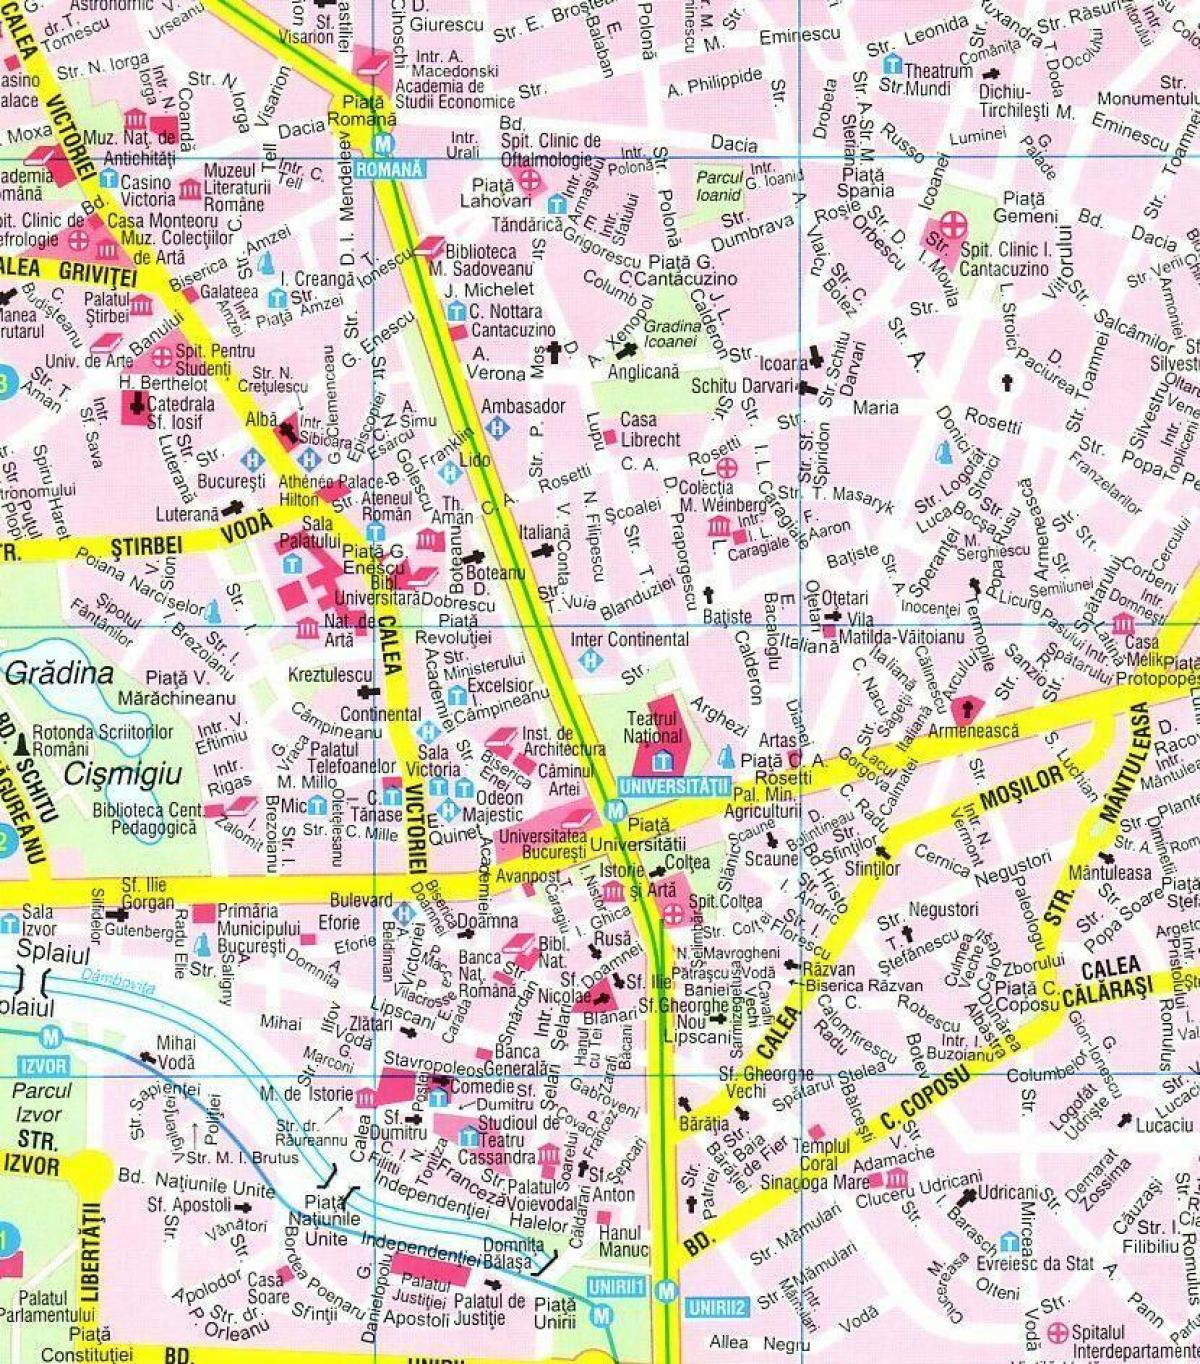 map of bucharest city centre